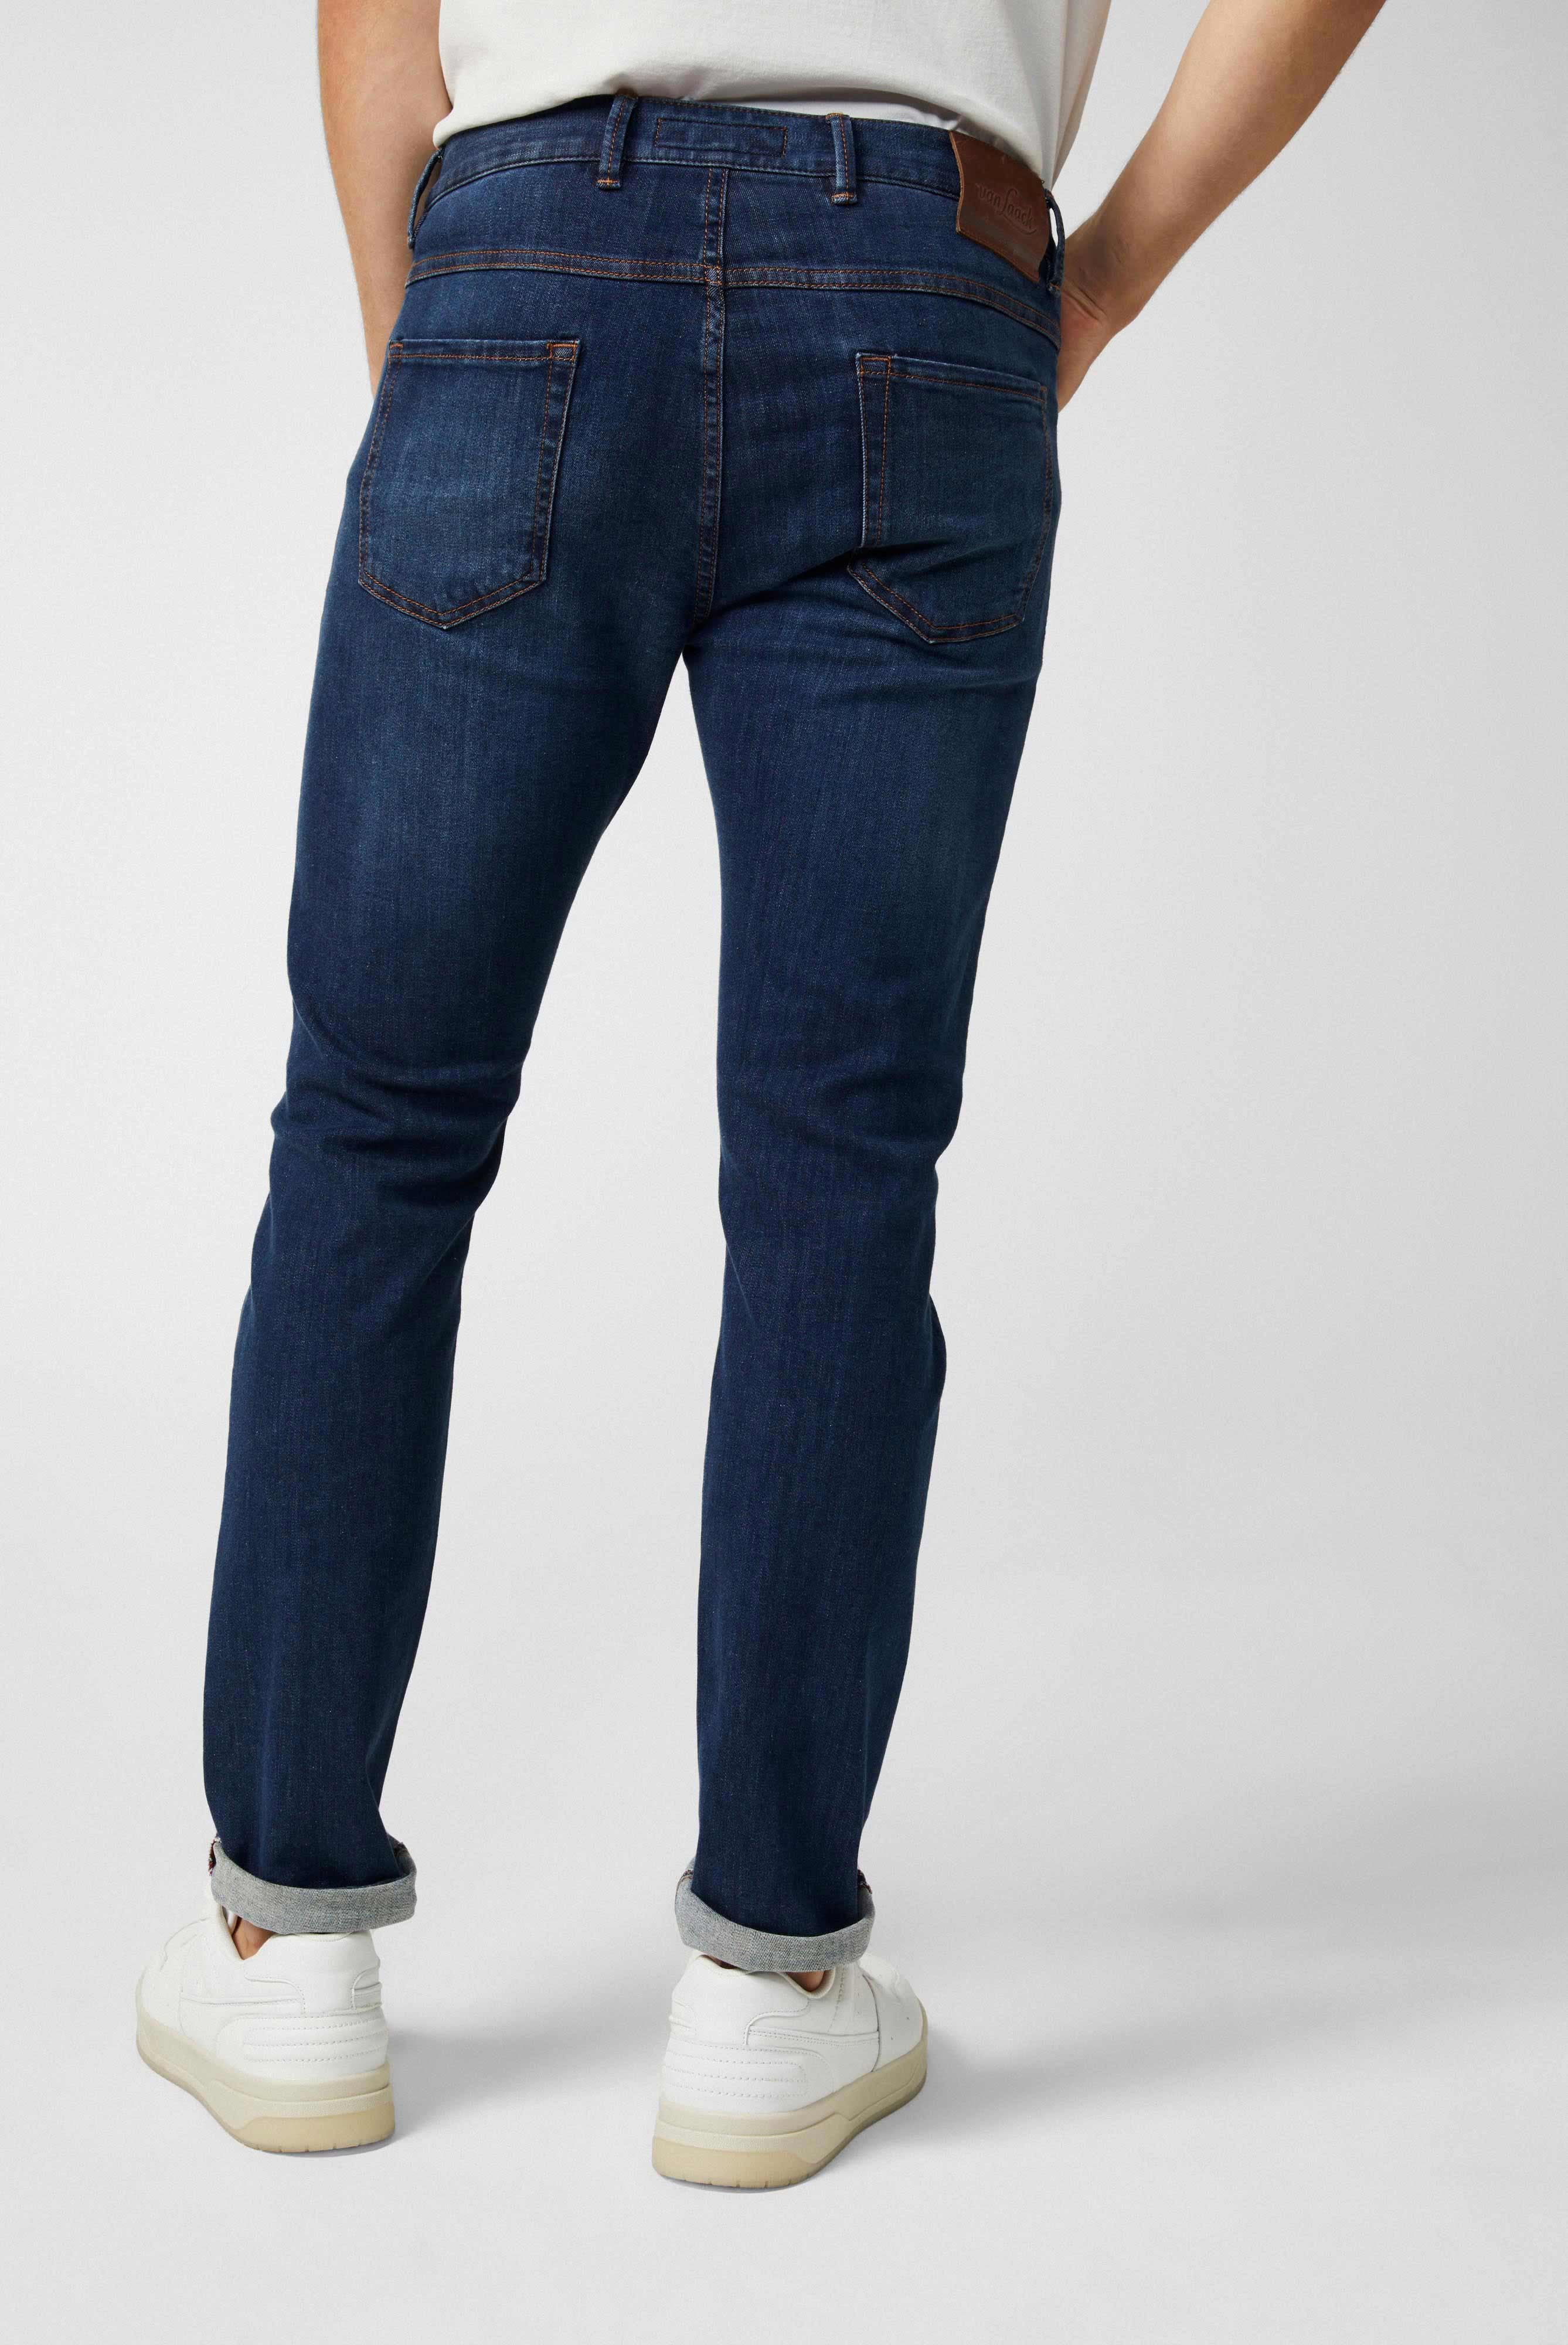 Jeans & Hosen+Jeanshose mit Streth Slim Fit+80.7857..J00117.780.30N